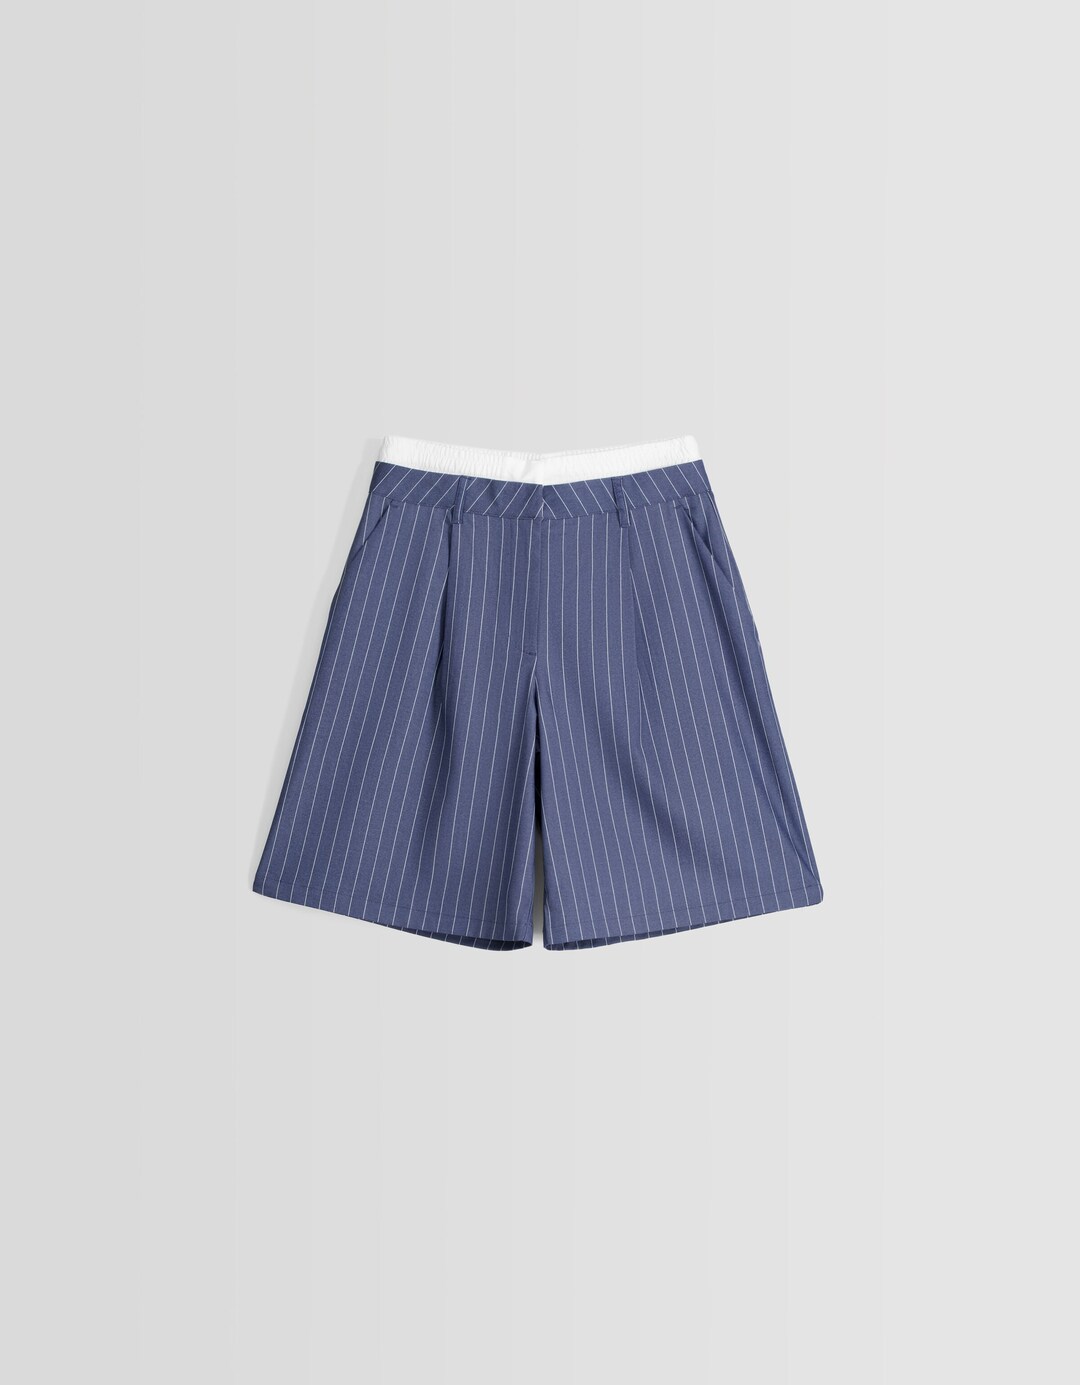 Tailored striped Bermuda shorts with underwear